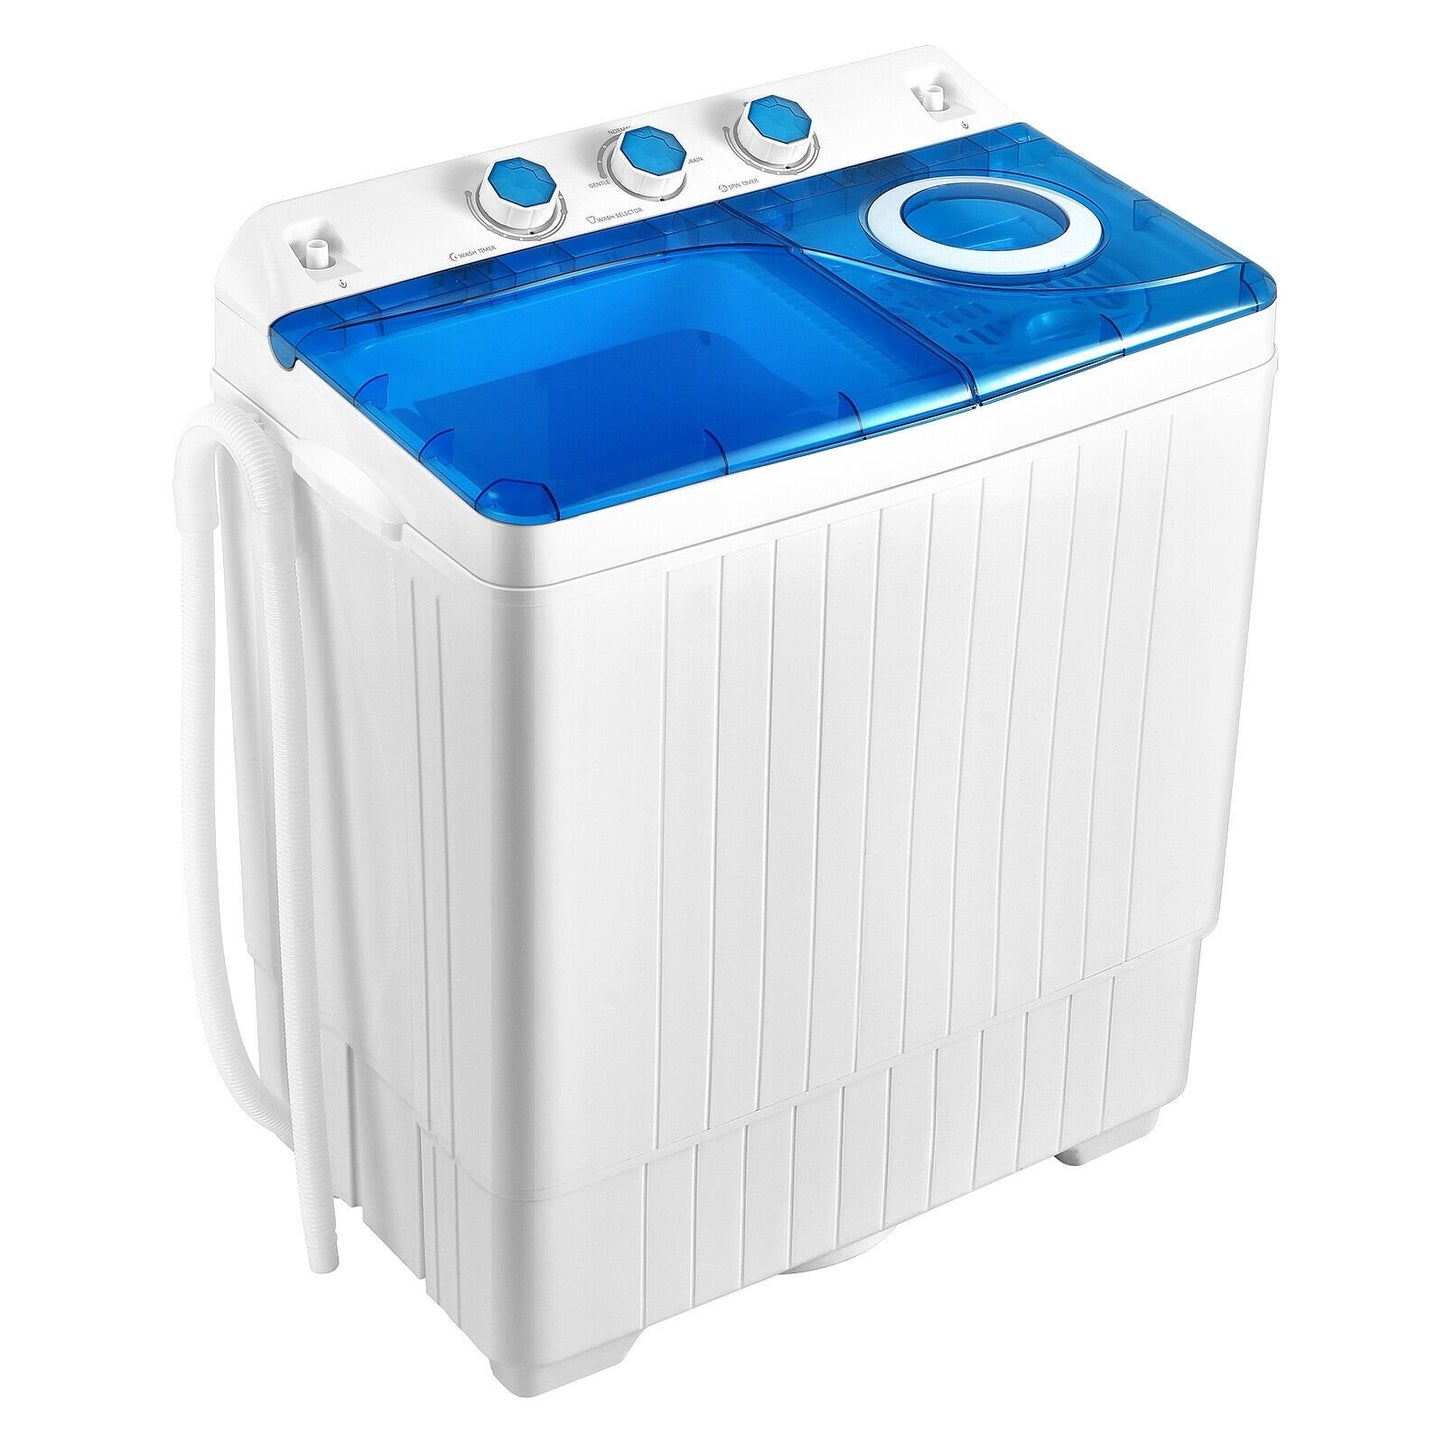 26lbs Portable Semi-Automatic Twin Tub Washing Machine with Drain Pump, Blue